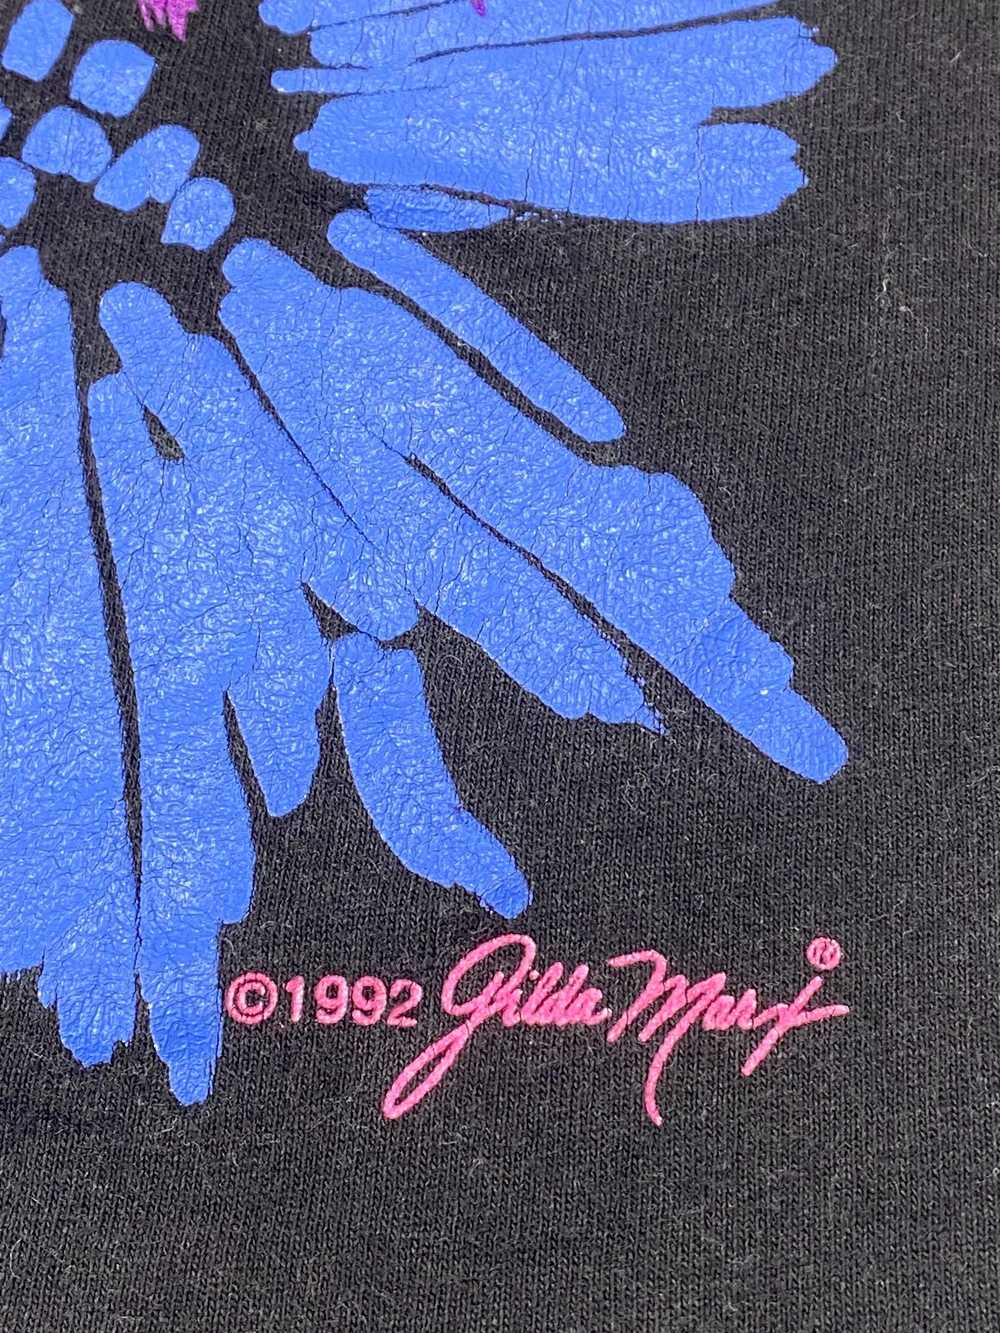 1990s Gilda Marx neon print flowers t-shirt dated… - image 2